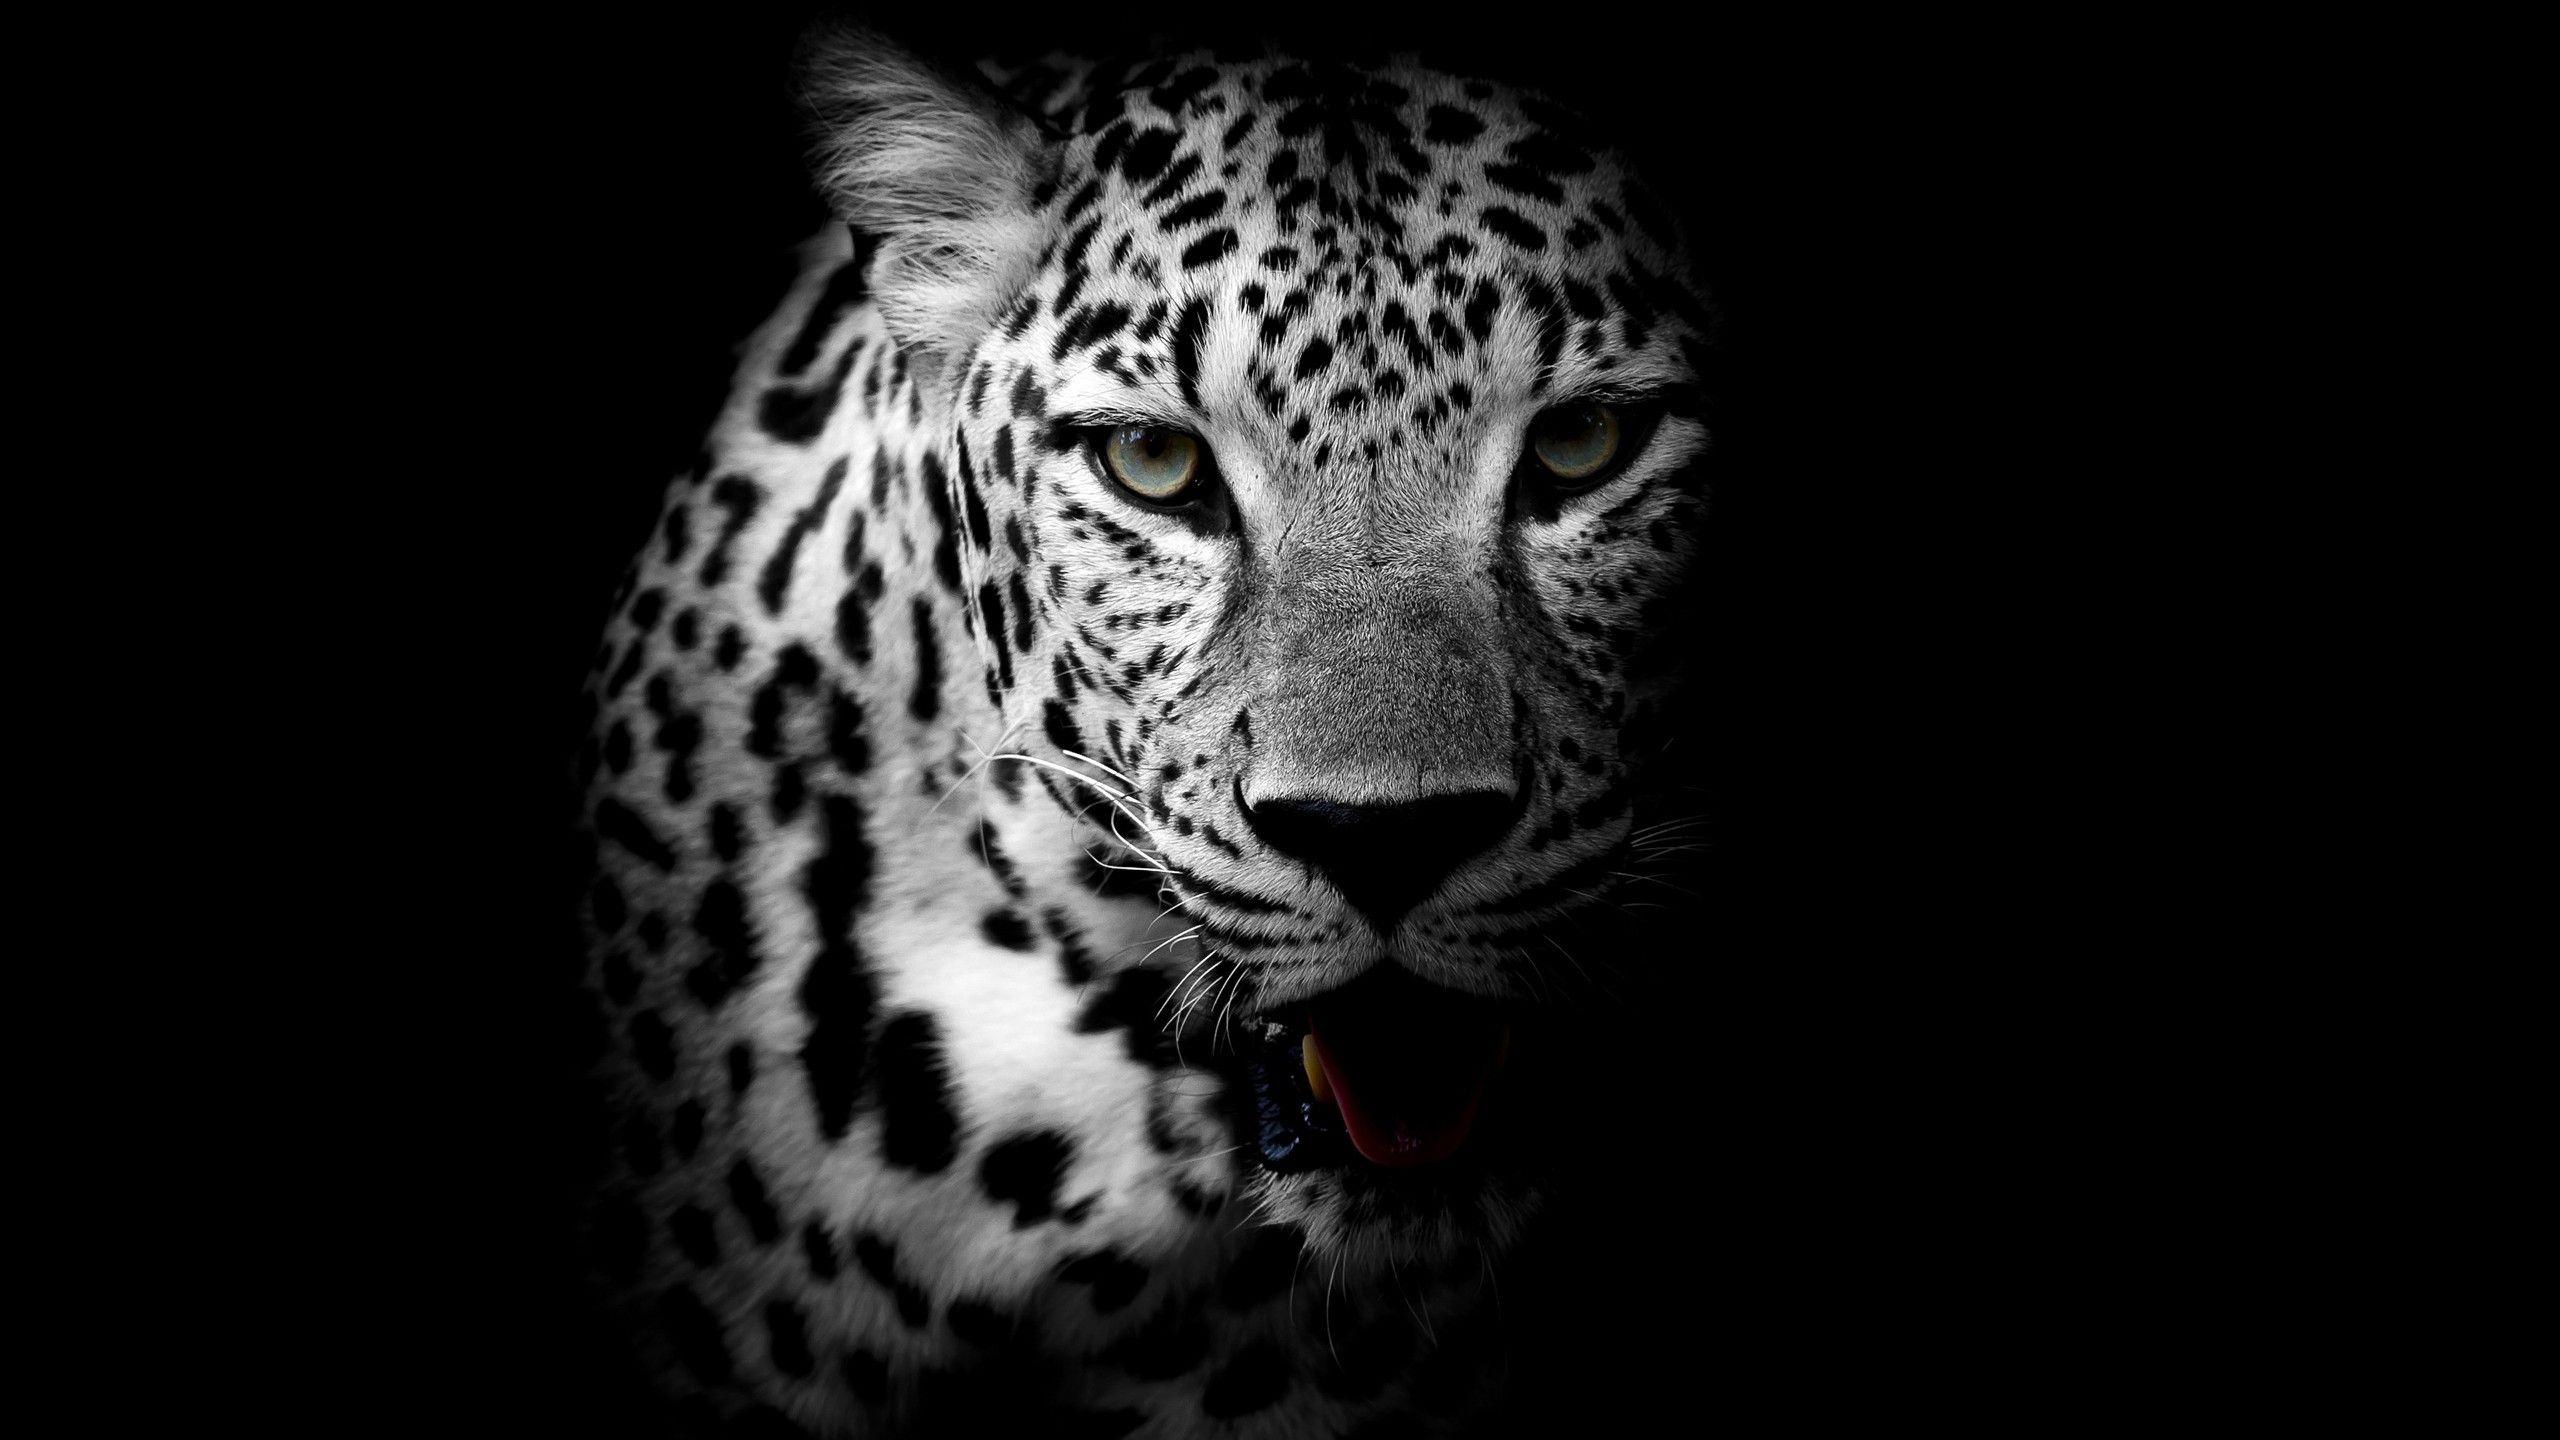 Leopard Background